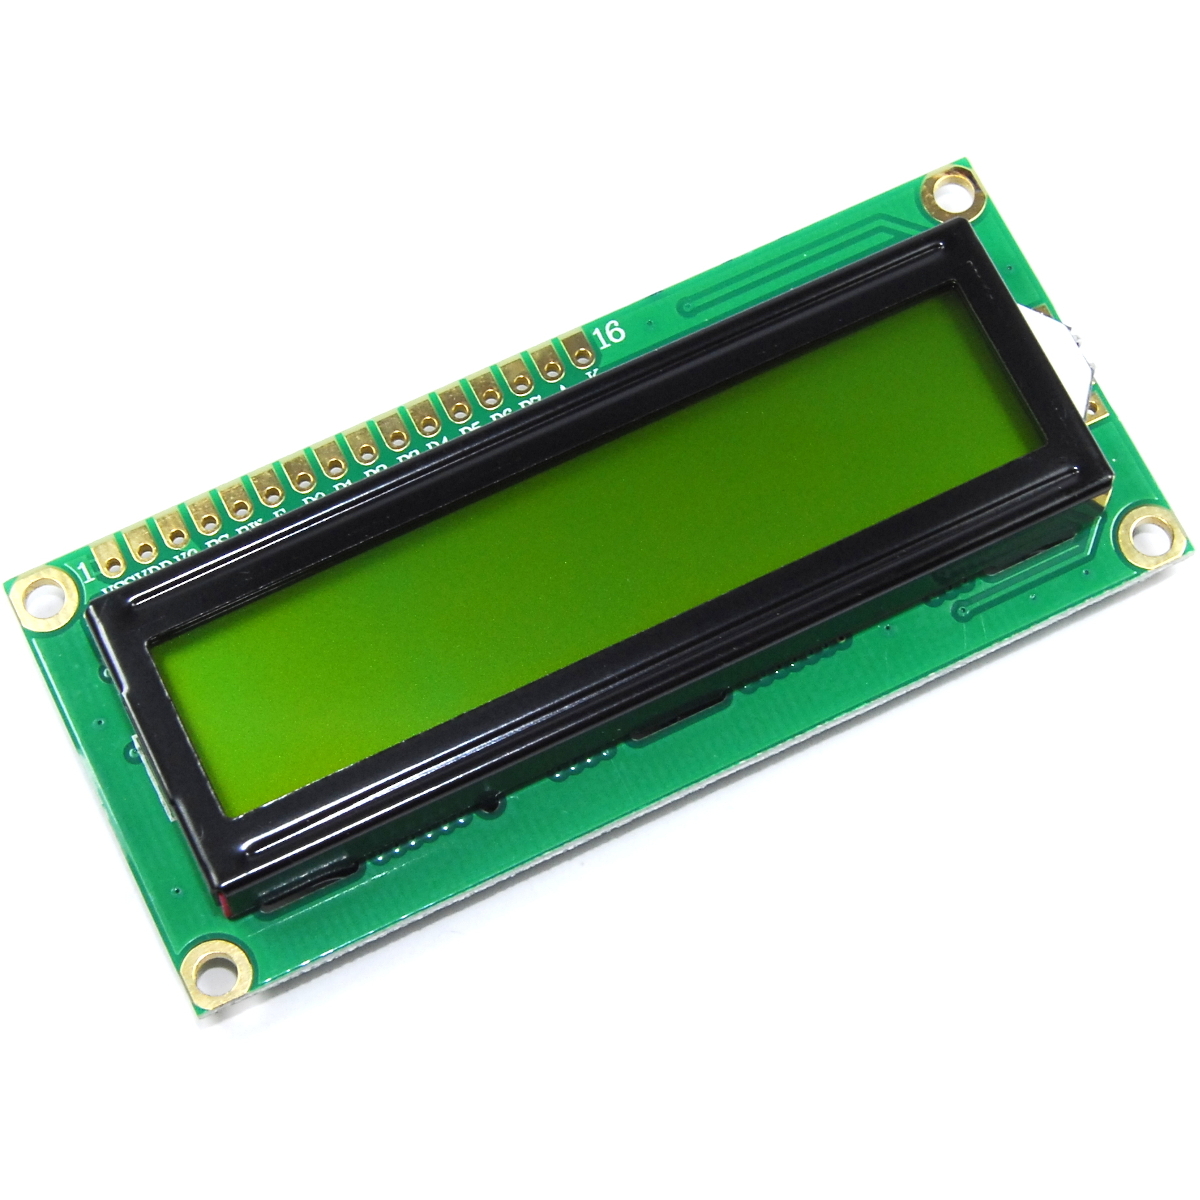 16x2 Green LCD Display Image 1